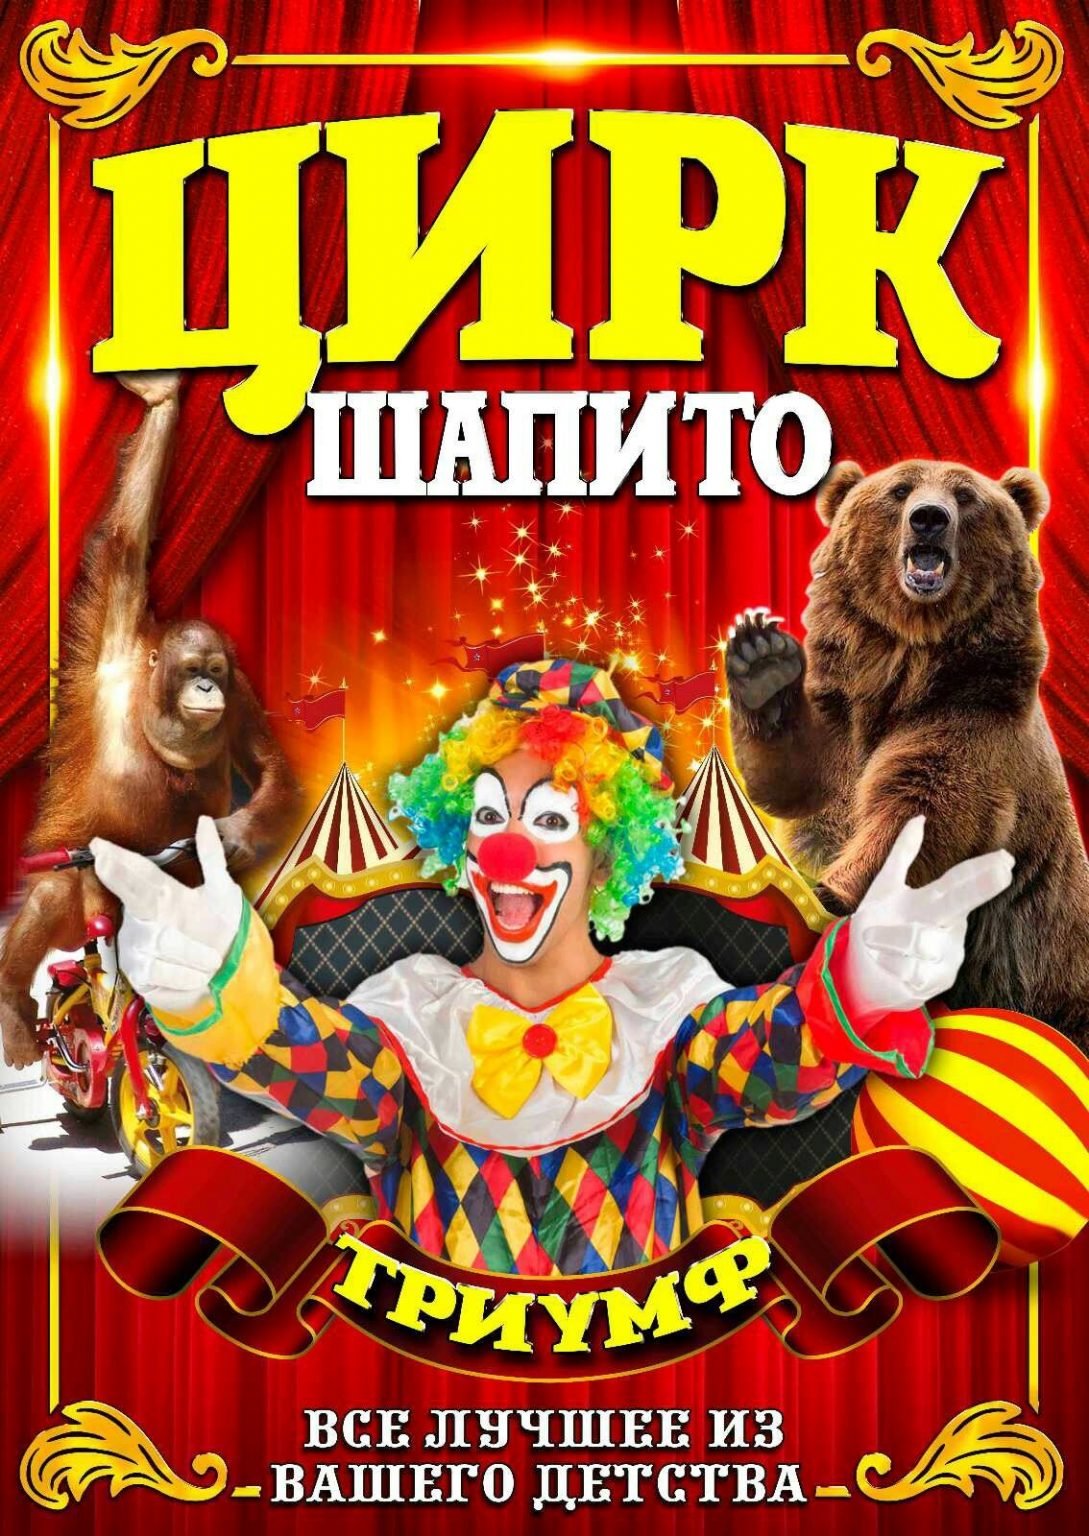 Реклама цирка